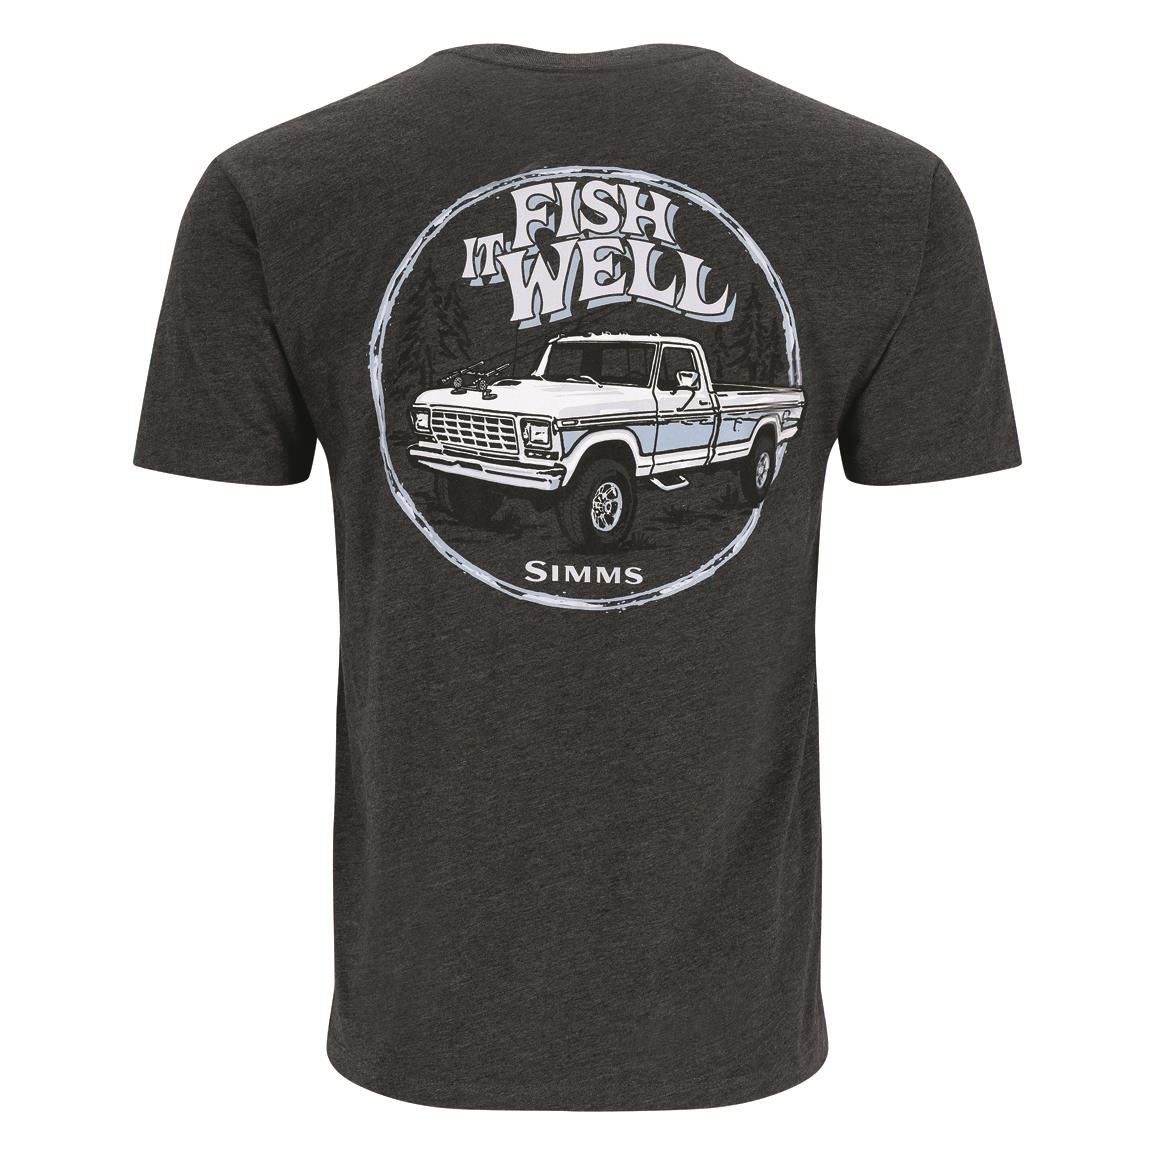 Simms Men's Fish it Well Truck T-Shirt, Charcoal Heather